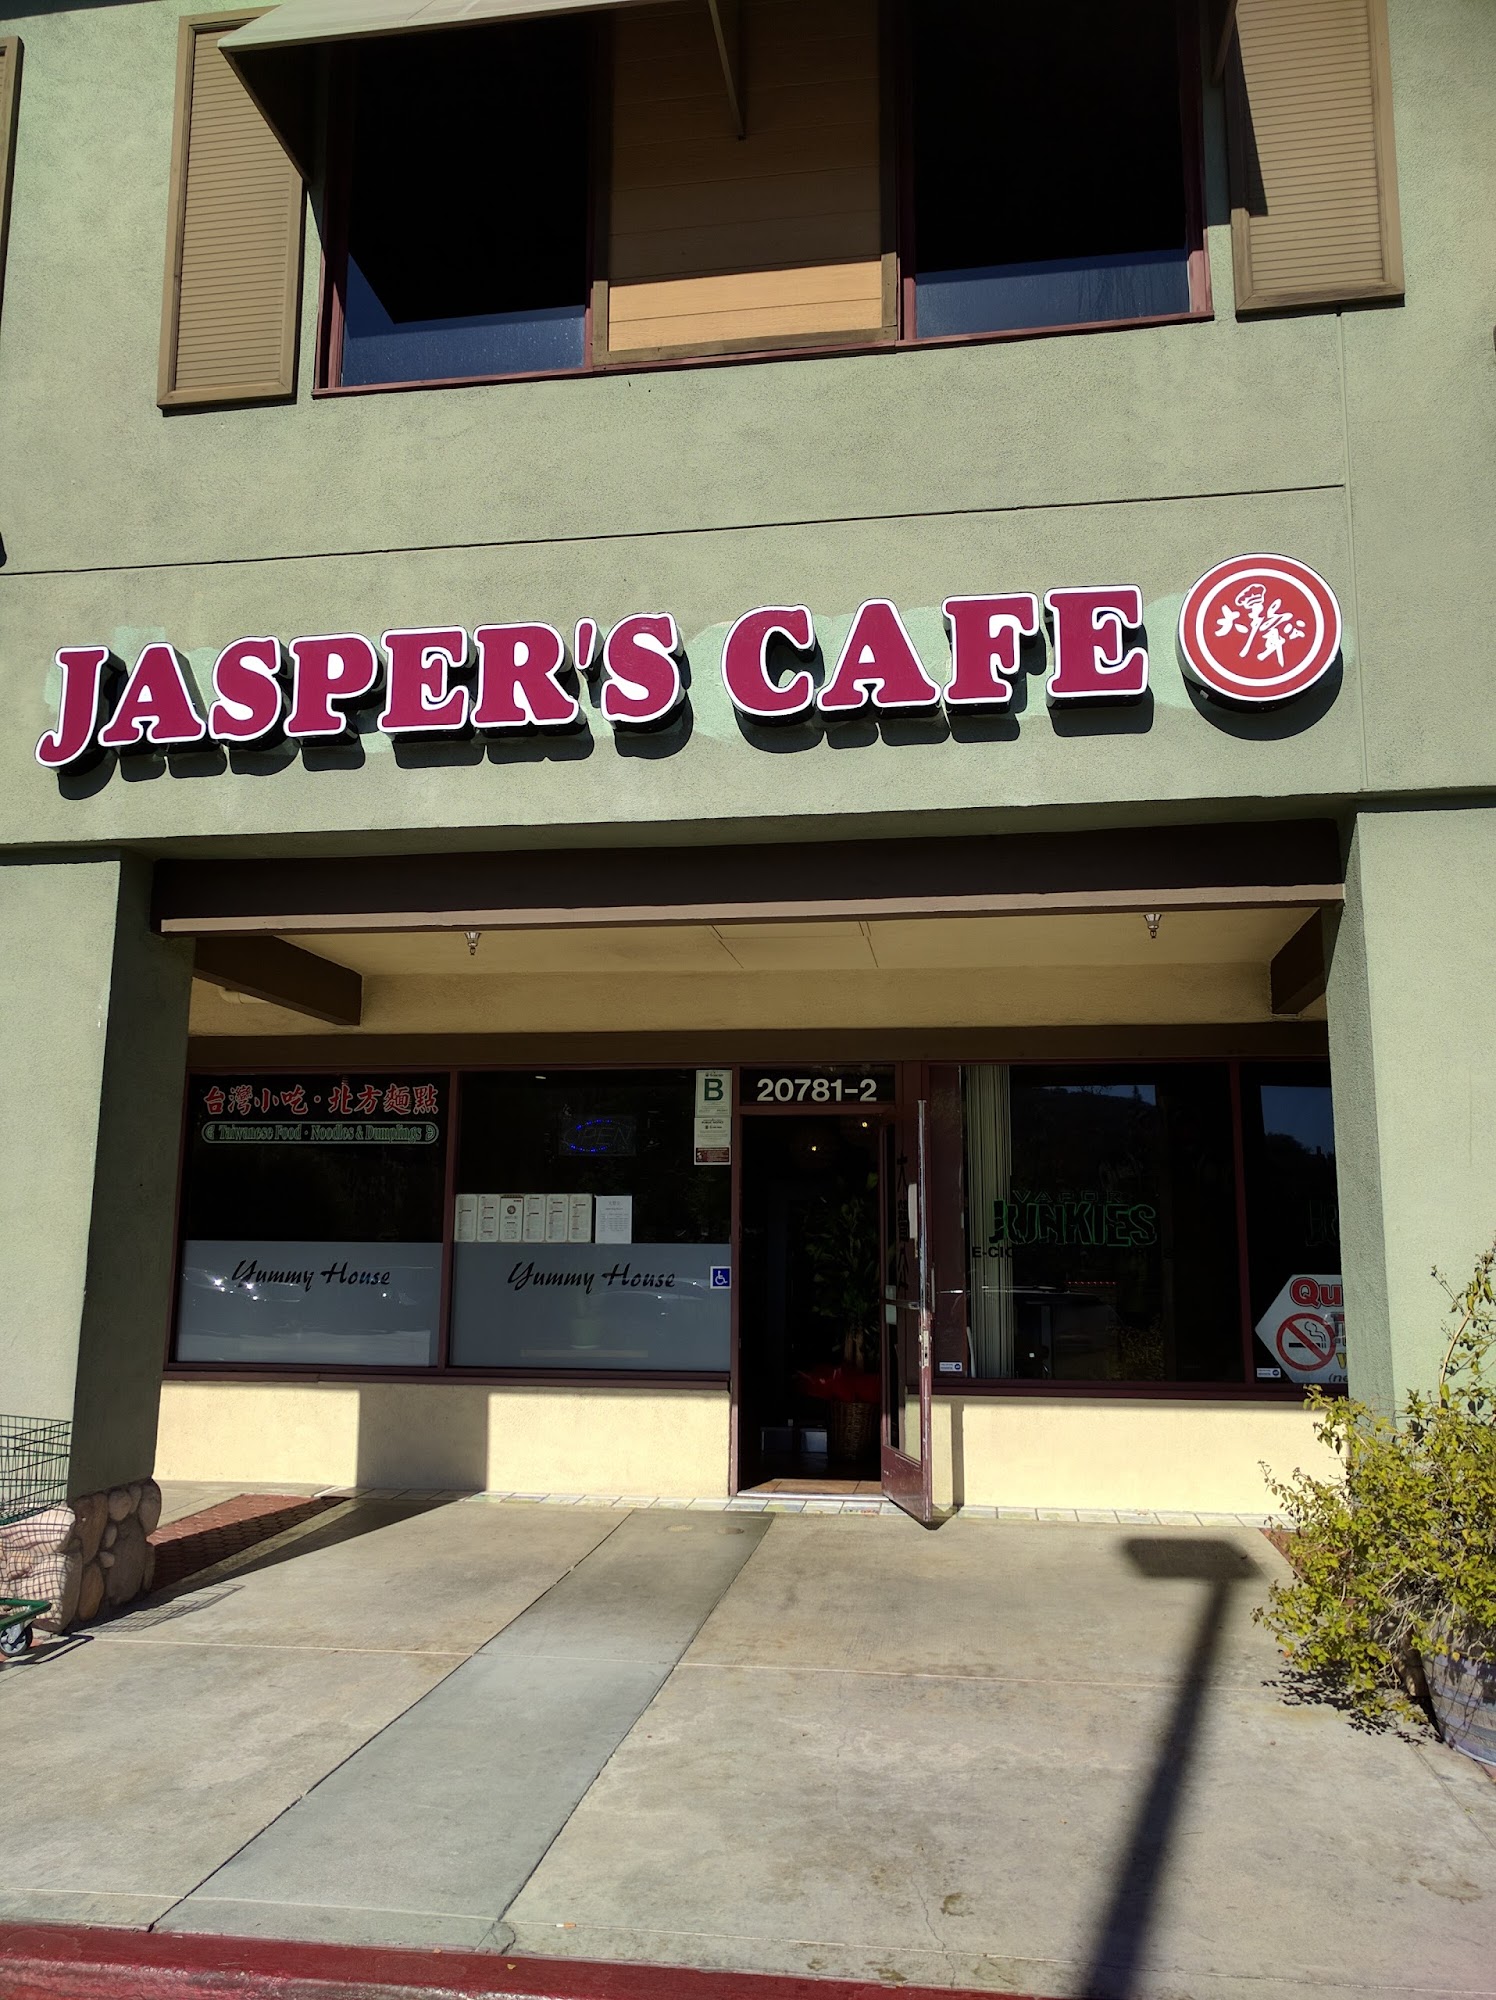 Jasper's Cafe